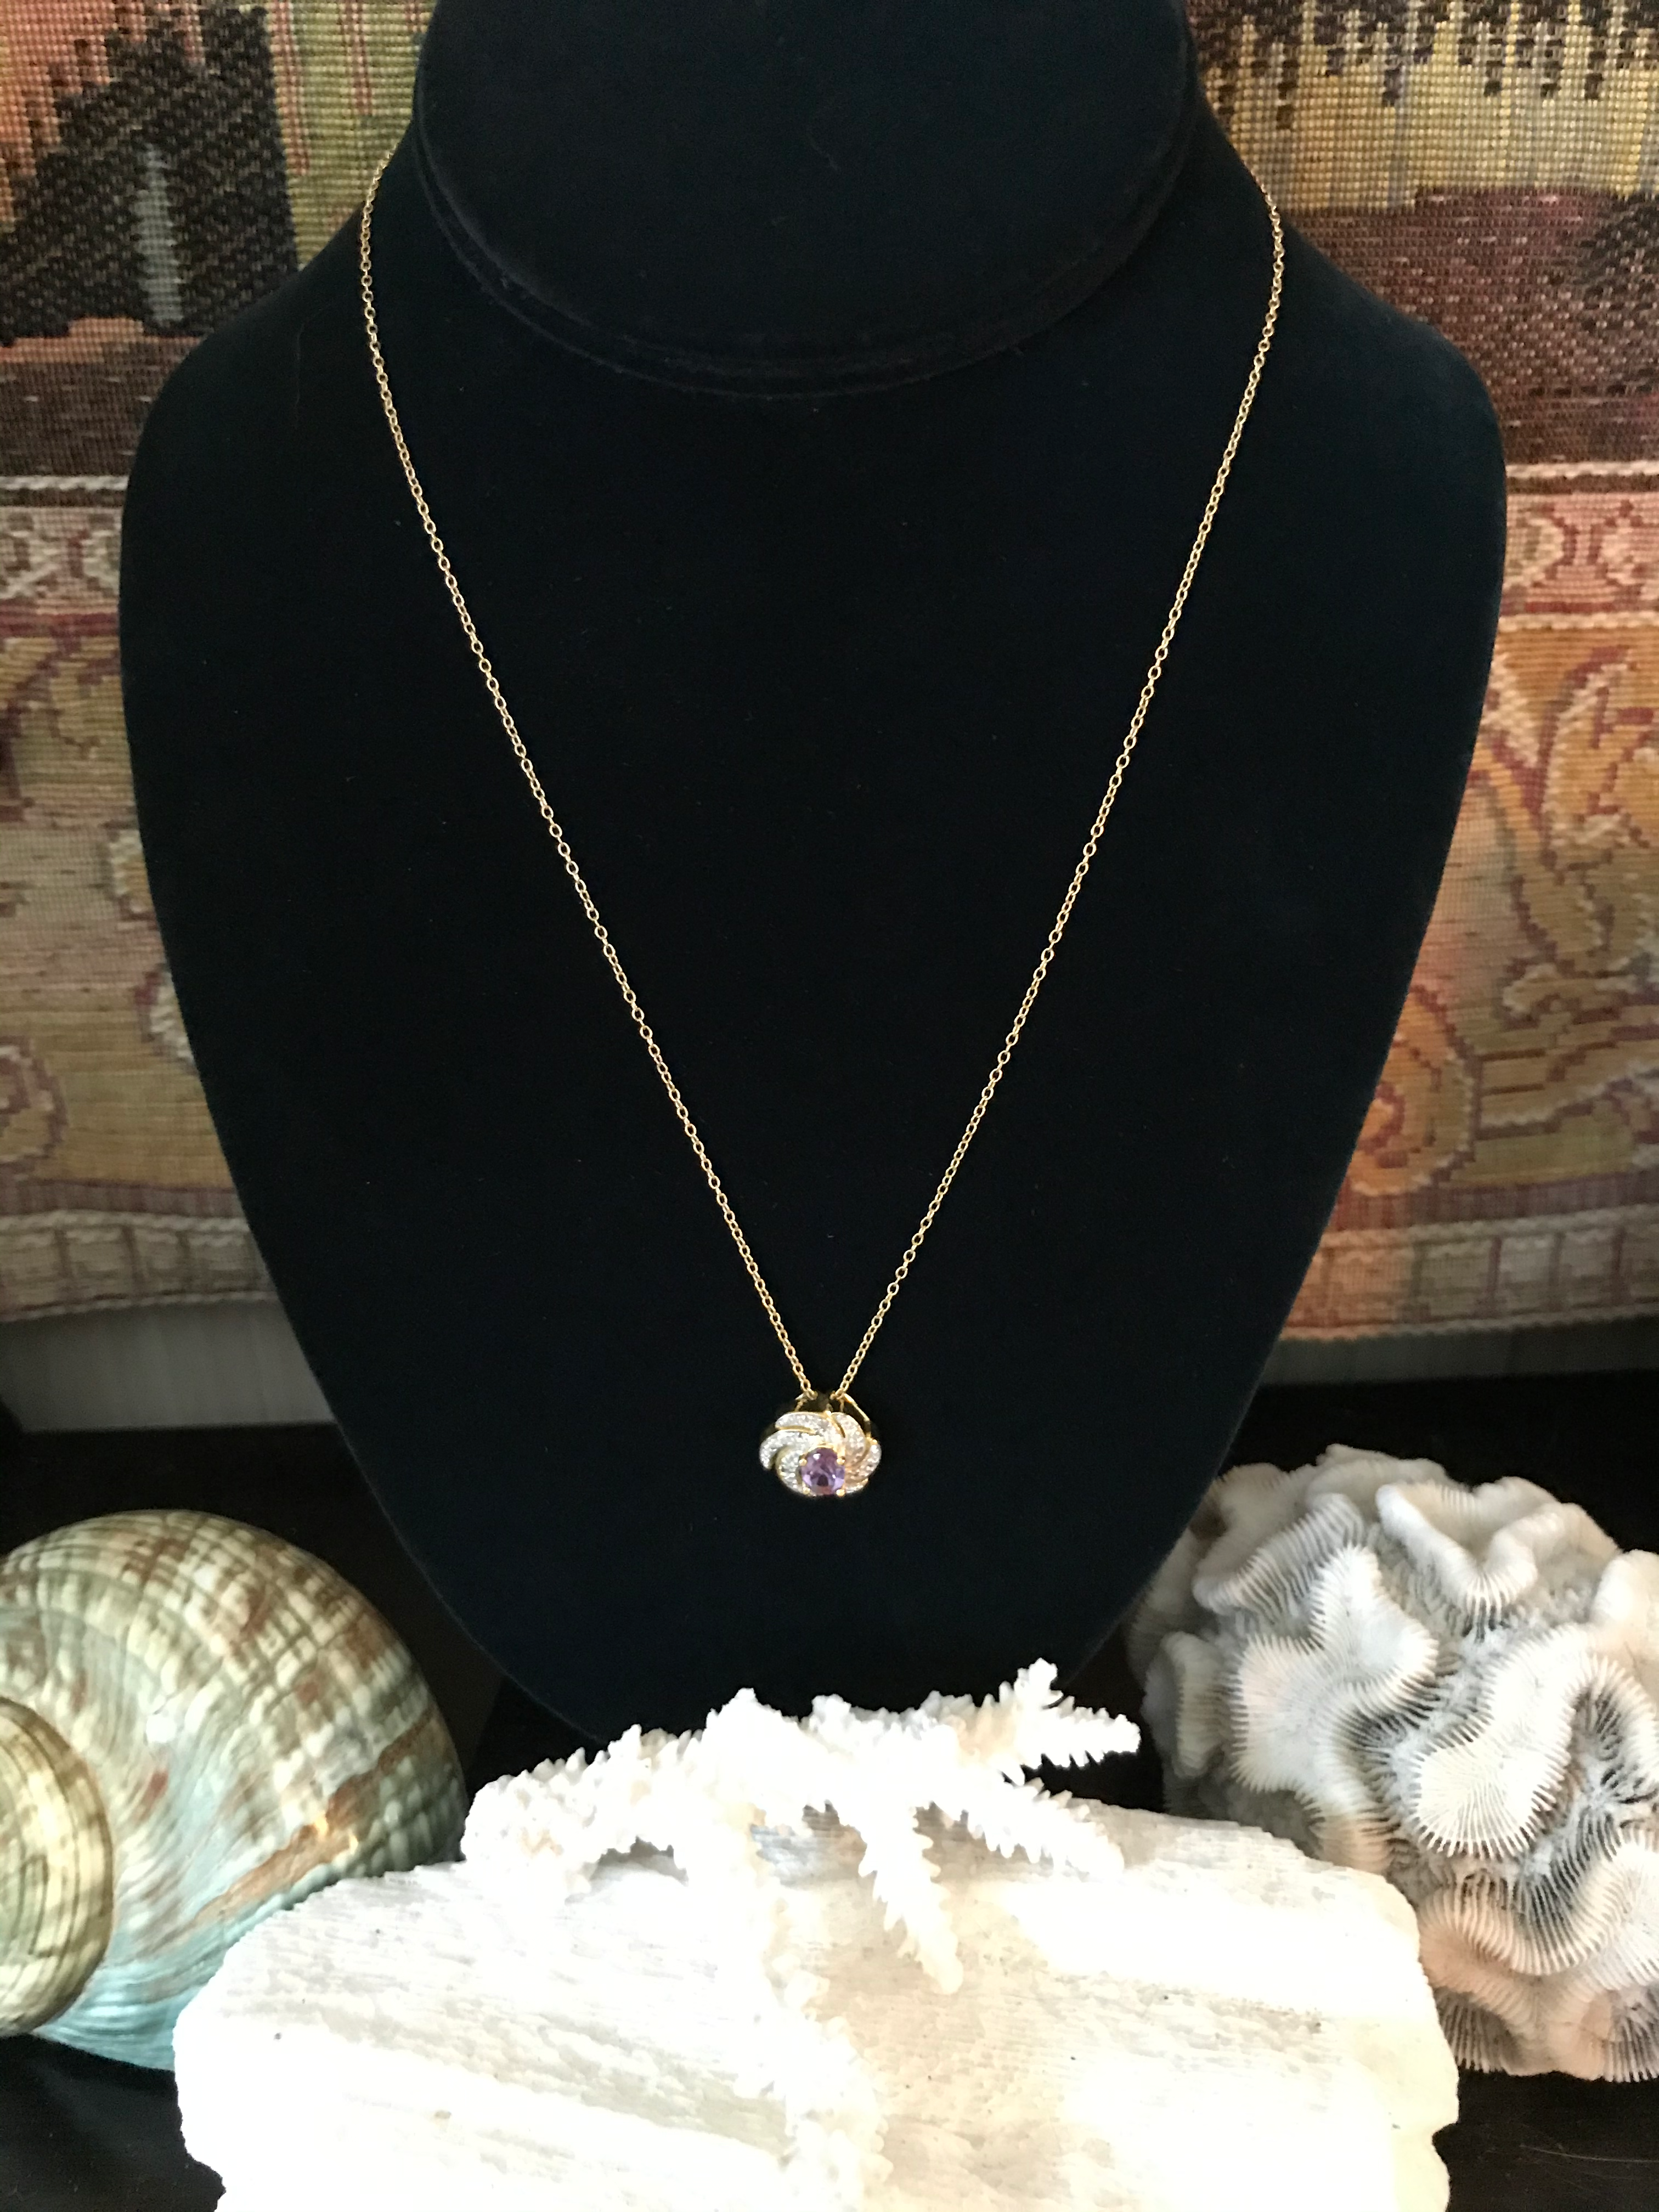 Diamond & Amethyst Pendant with 18" Chain - Shop Thrifty Treasures